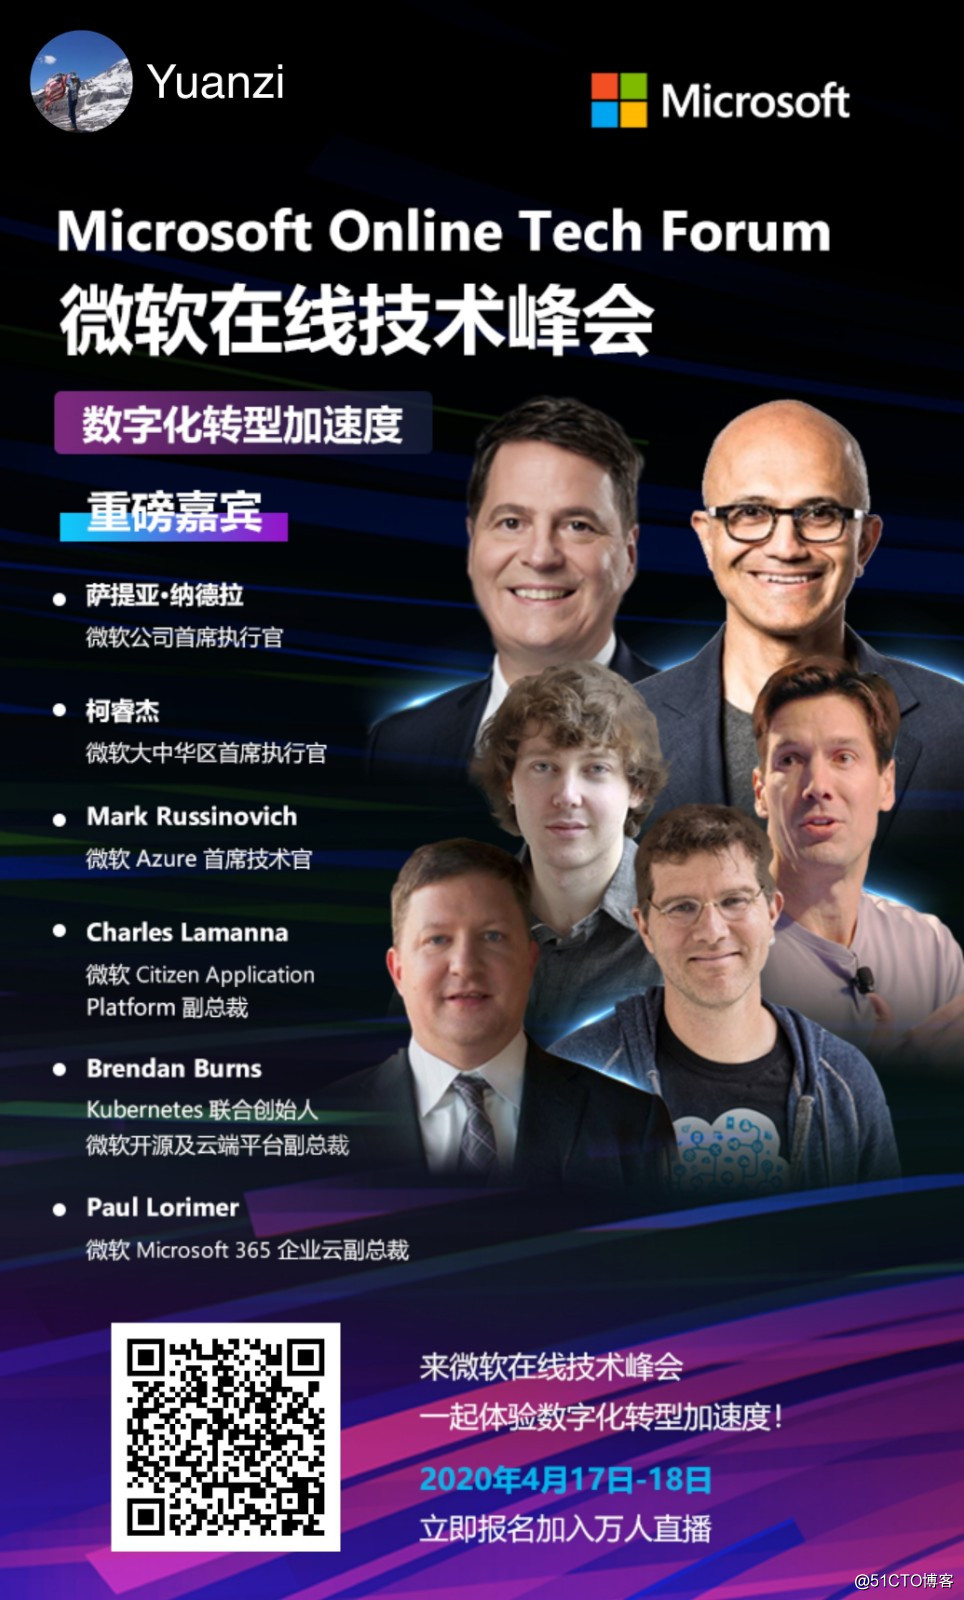 Microsoft Online Tech Forum Online Microsoft Technology Summit 2020, April 17-18